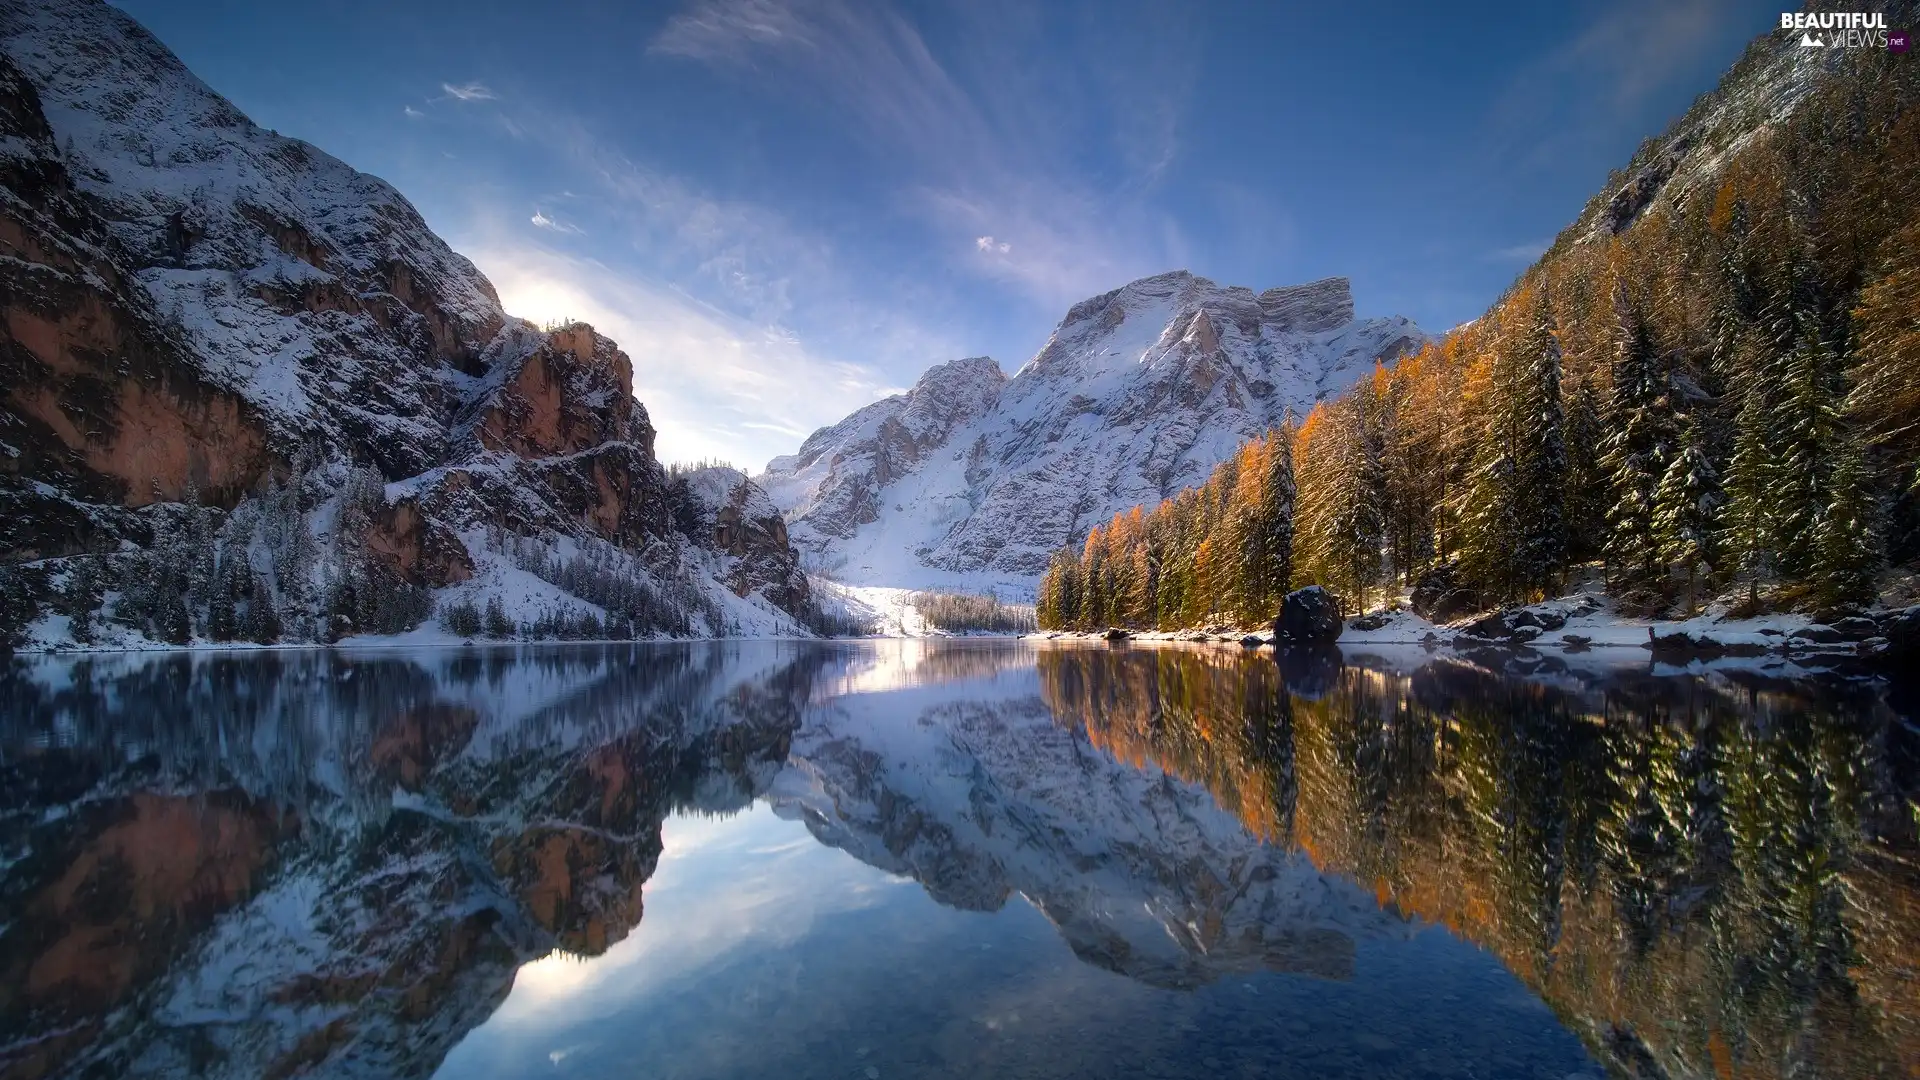 reflection, Pragser Wildsee Lake, viewes, Dolomites Mountains, Italy, trees, winter